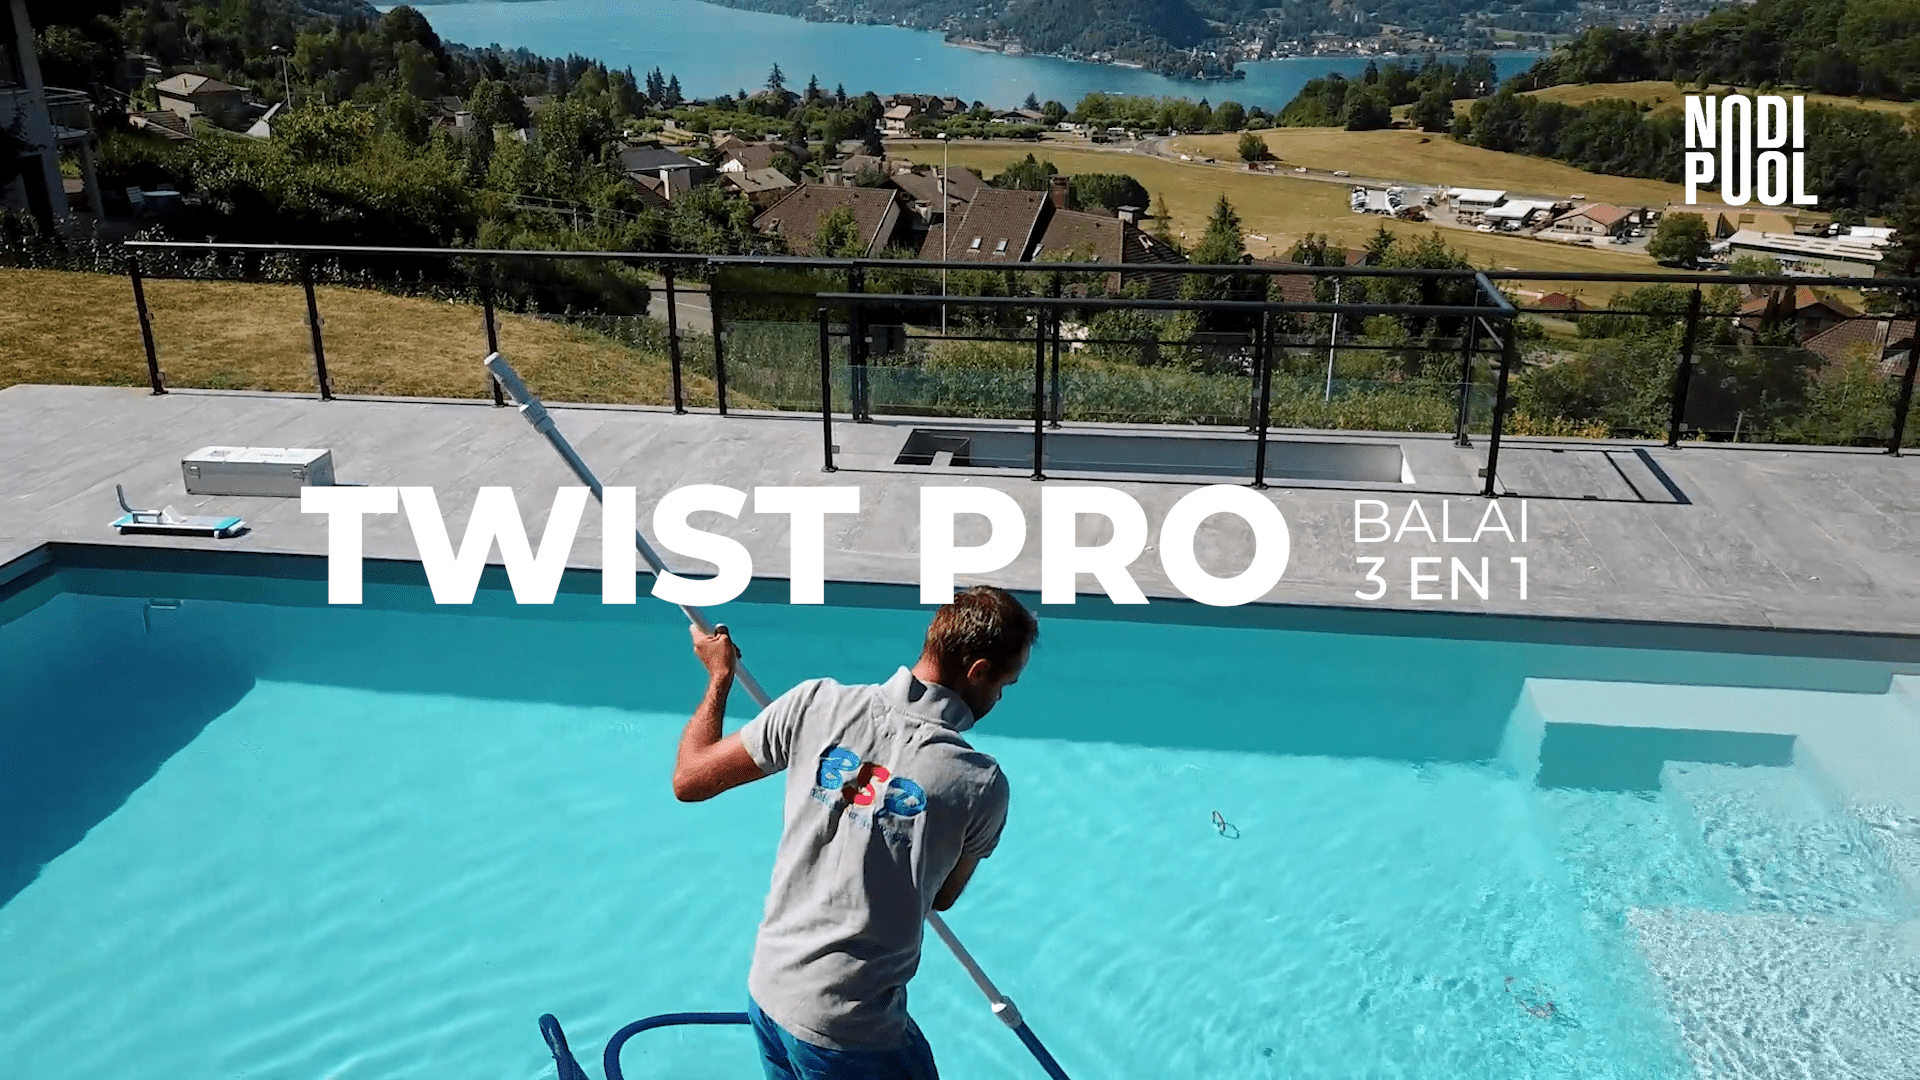 Vidéo Twist Pro Nodipool